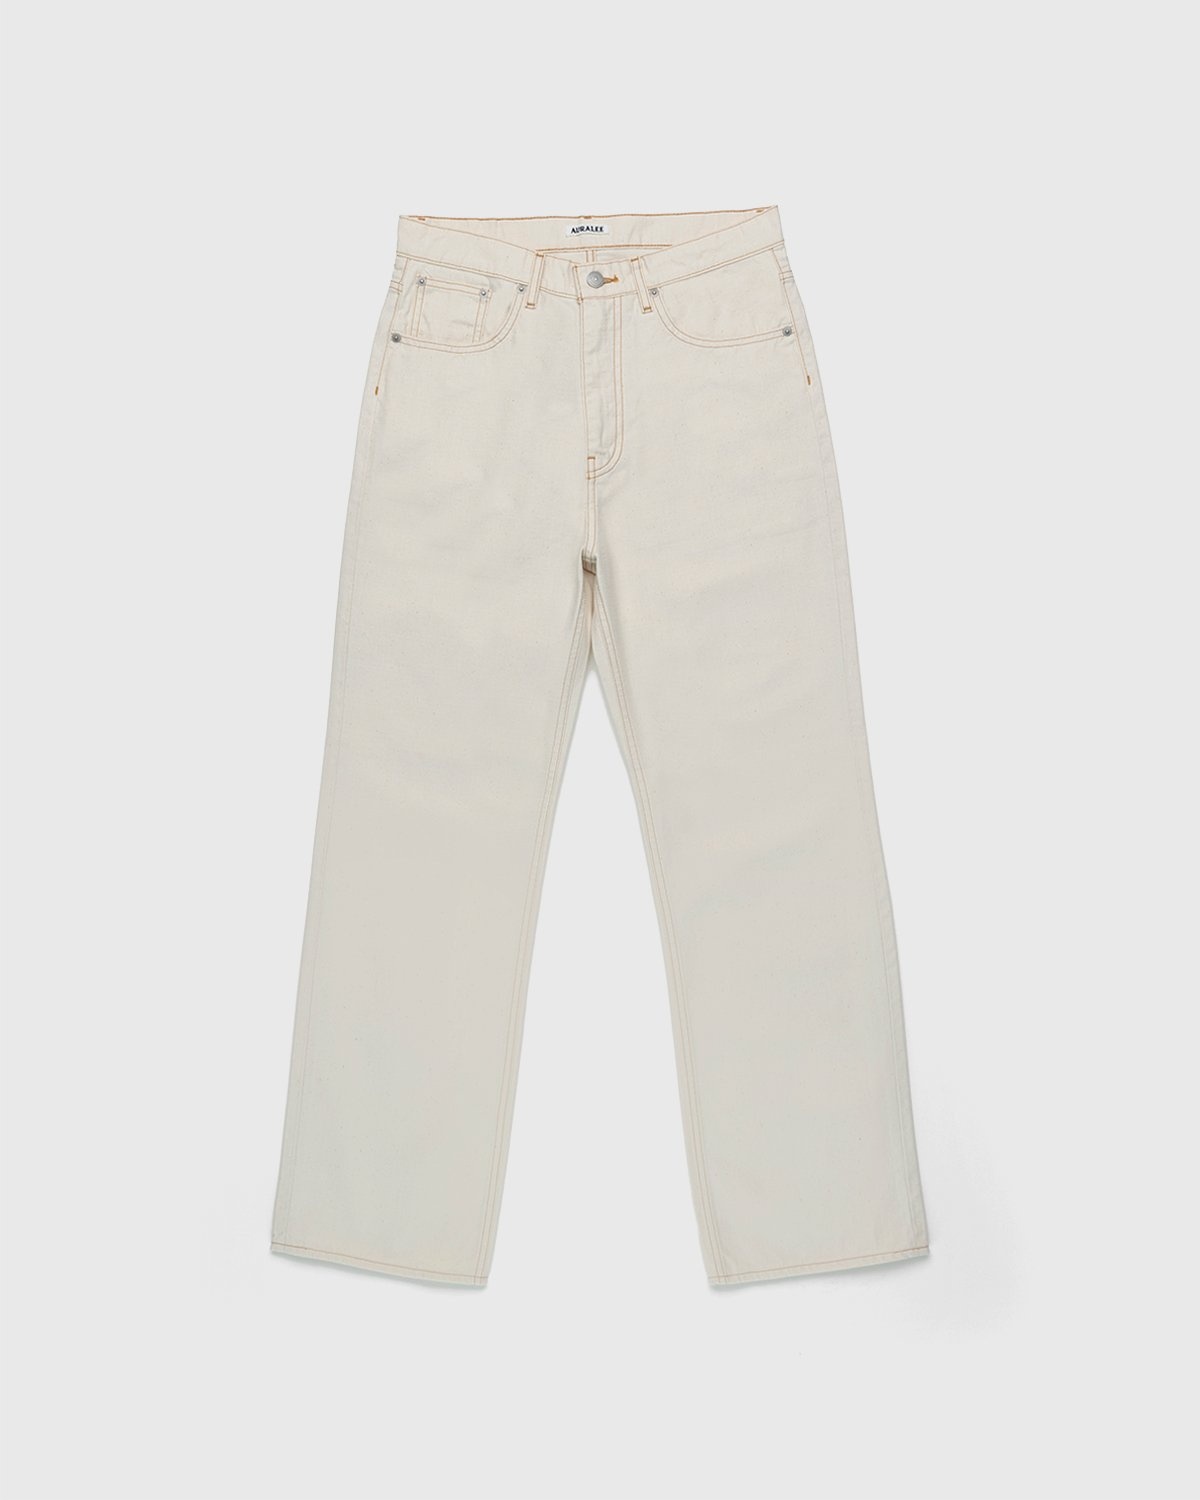 Auralee – Organic Undyed Cotton Pants Natural - Pants - Beige - Image 1